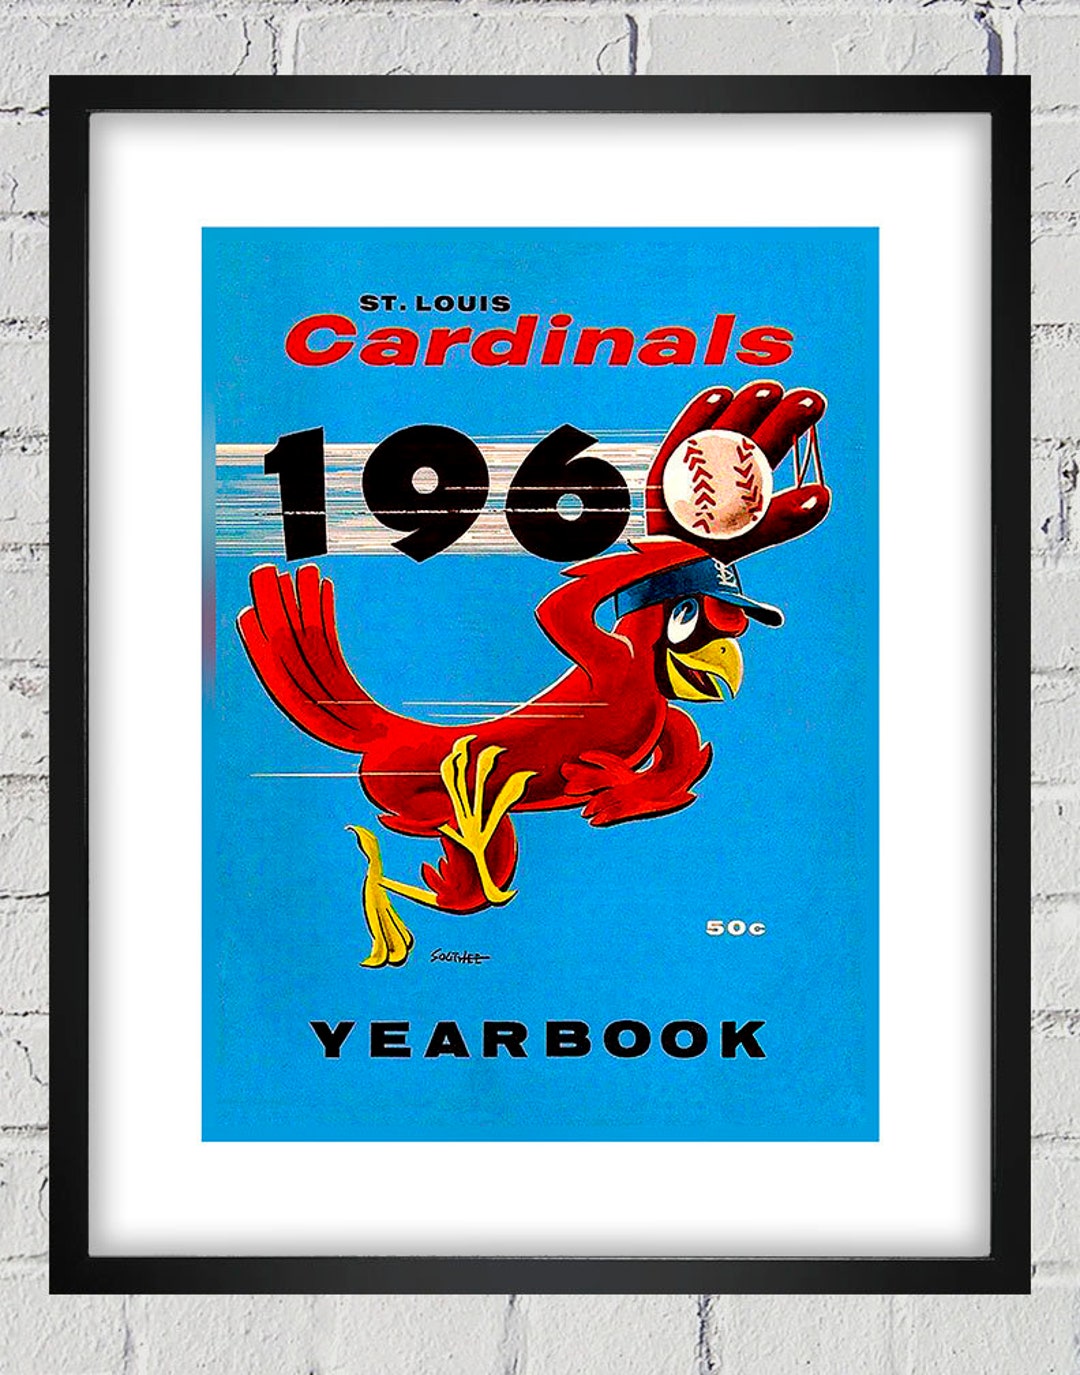 St. Louis Cardinals 12 x 16 1952 Program Cover Art Print